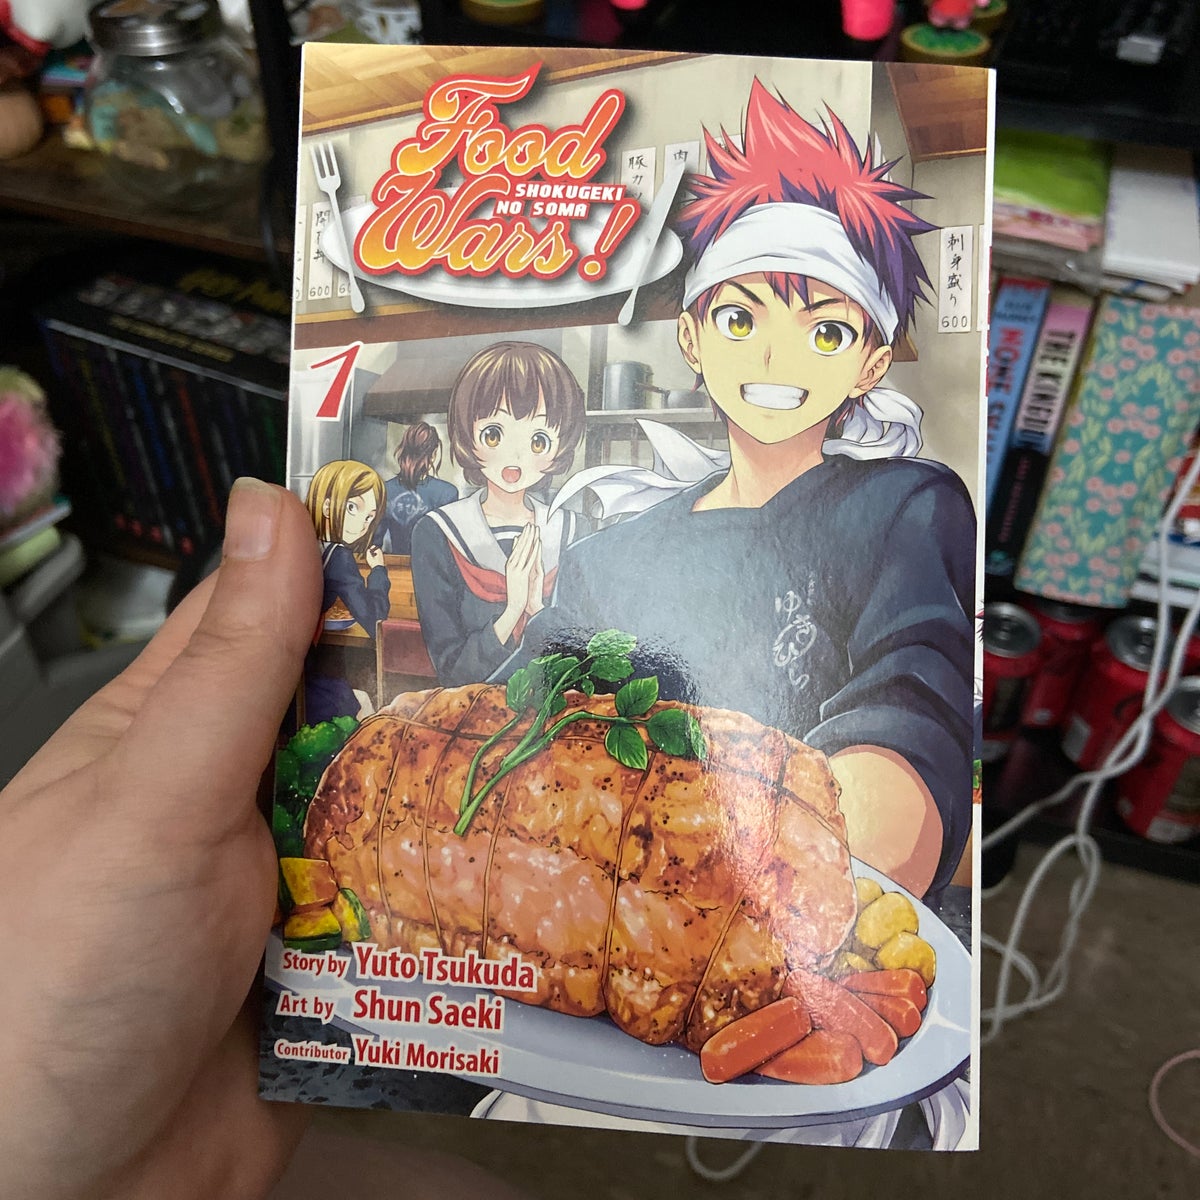 Food Wars!: Shokugeki no Soma, Vol. 2 (2) by Morisaki, Yuki